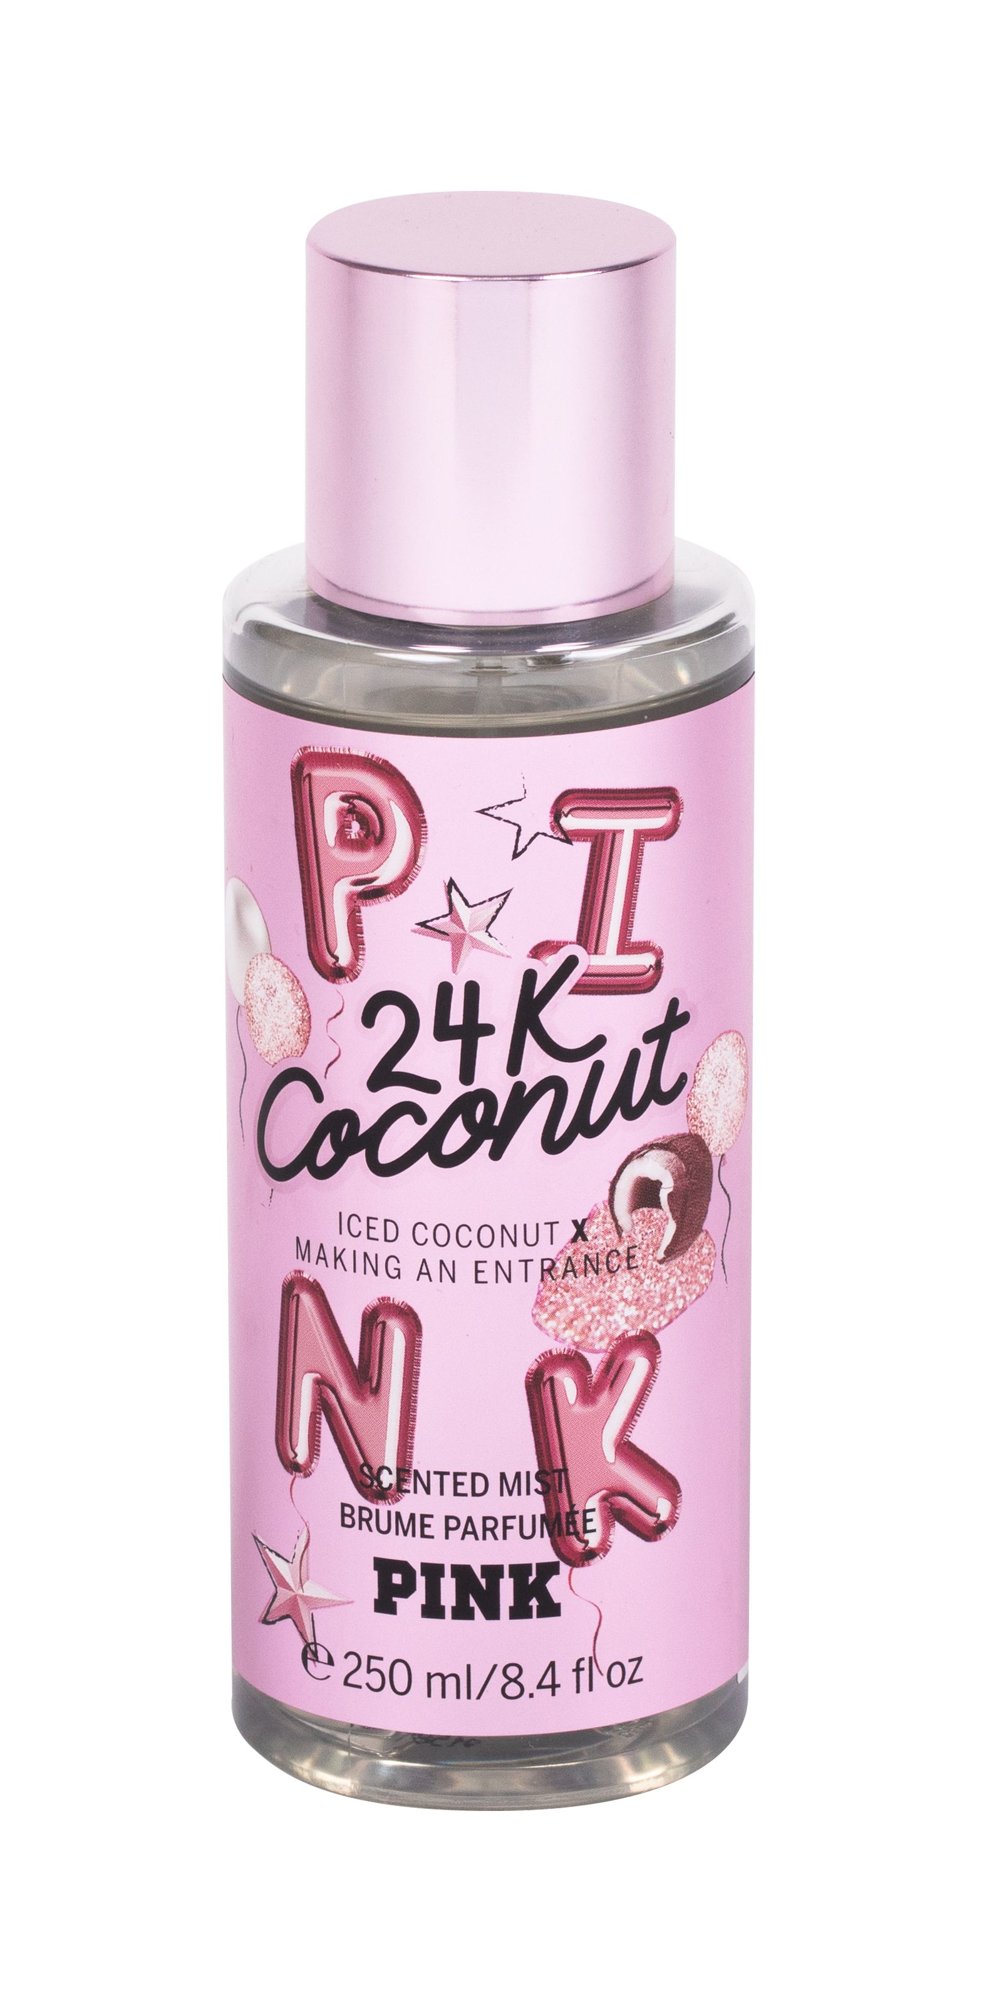 Pink 24K Coconut